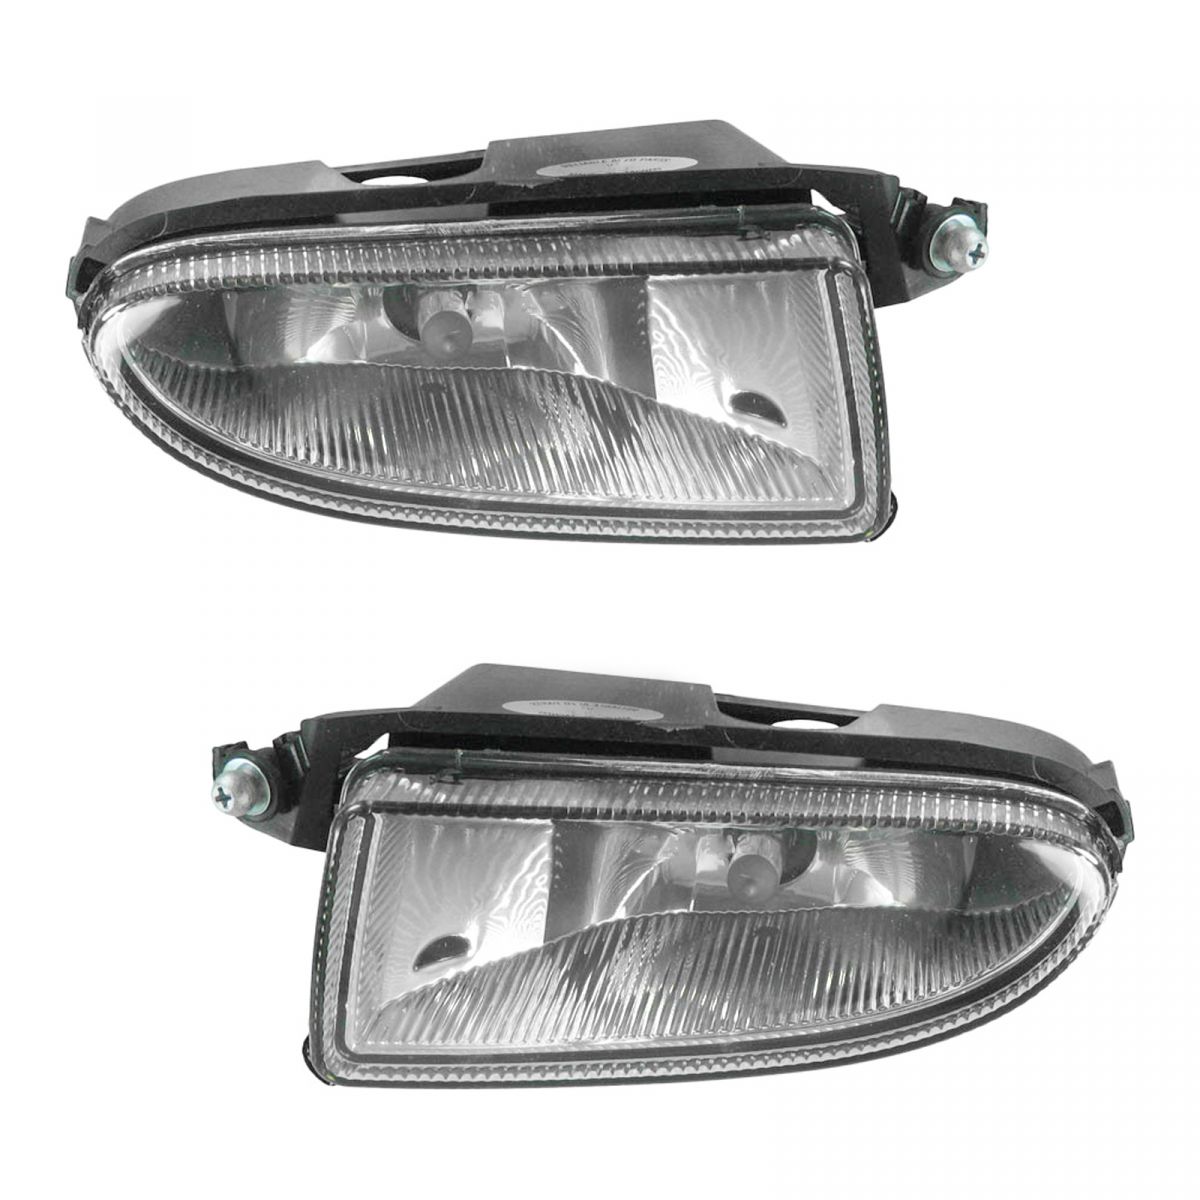 01-05 PT Cruiser Headlight Headlamp Head Light Lamp Right /& Left Side Set PAIR